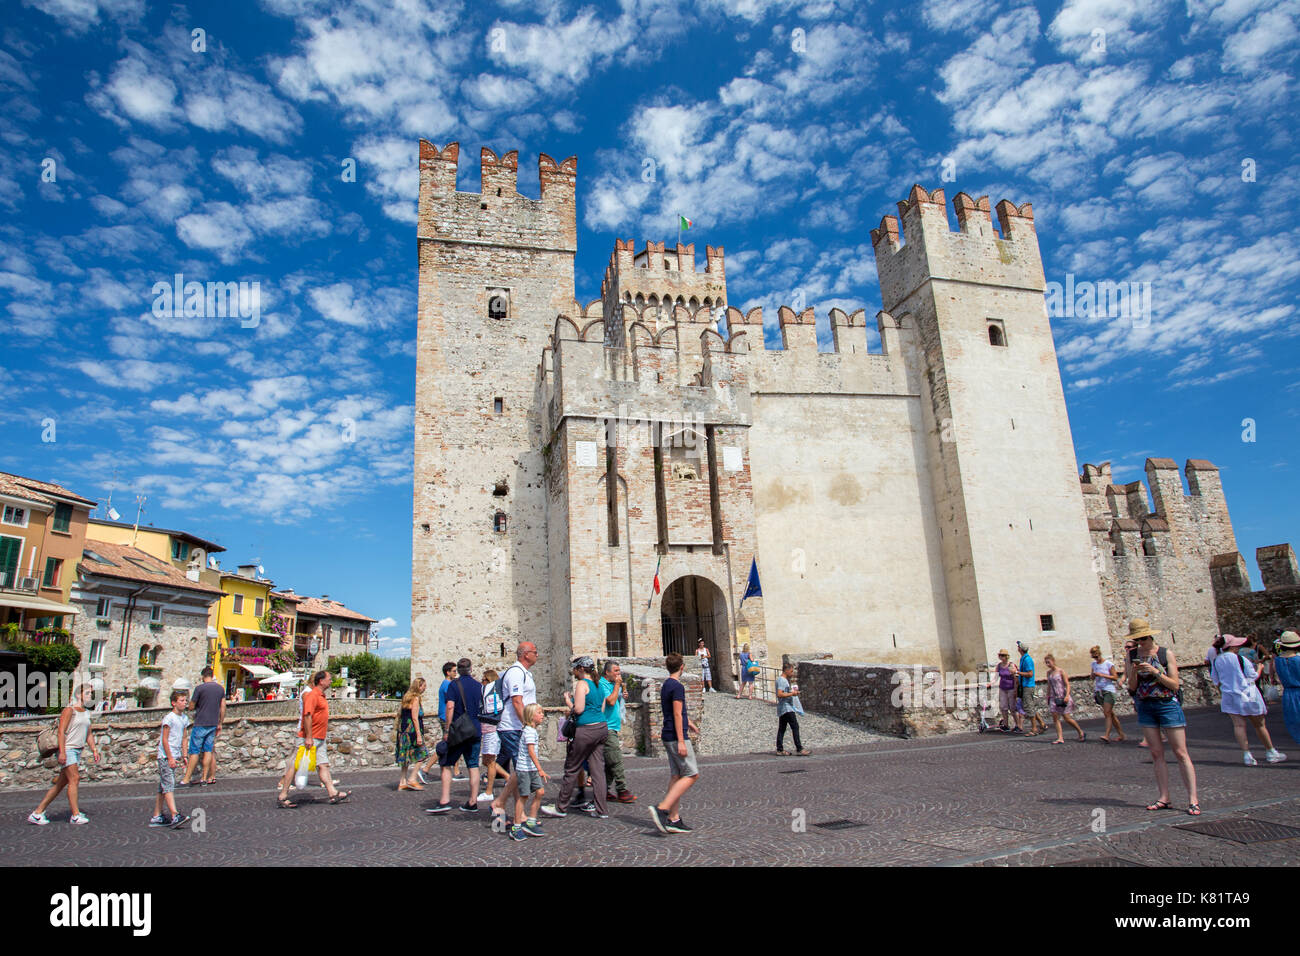 Rocca scaligera castle, Sirmione, Lake Garda, Italy Stock Photo